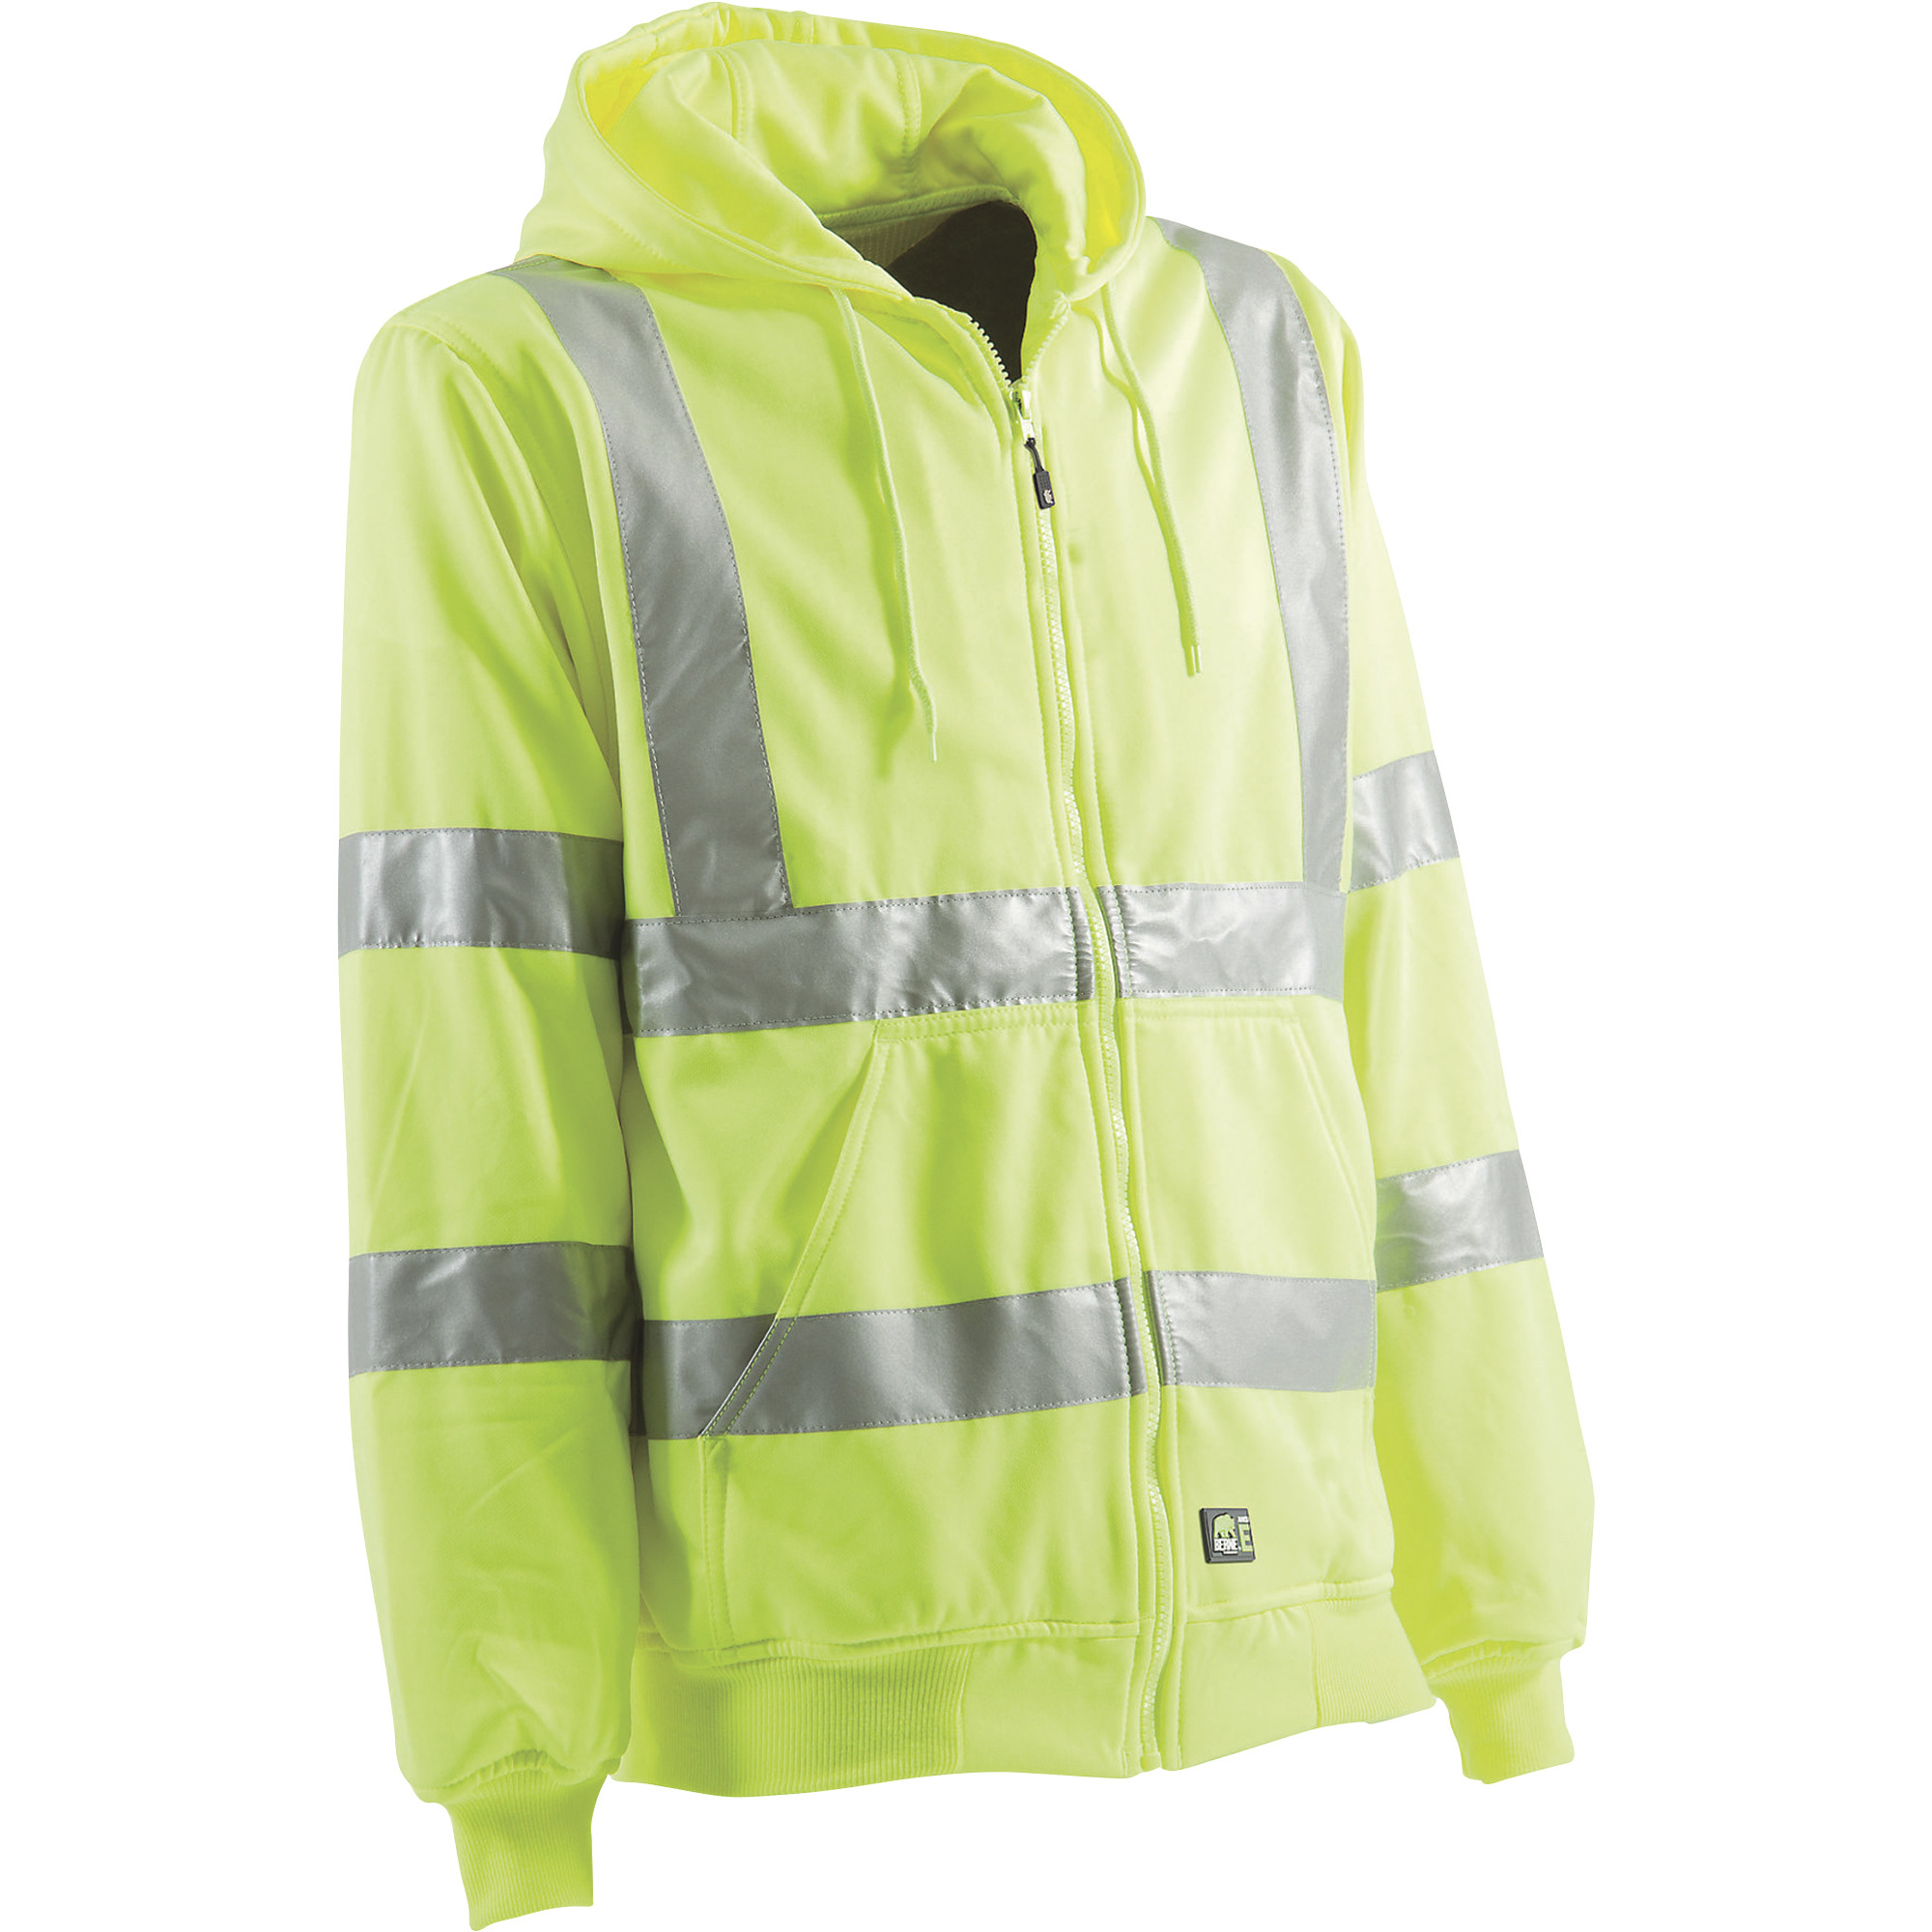 Berne Men's Class 3 High Visibility Hooded Sweatshirt â Lime, XL, Model HVF021YWR480